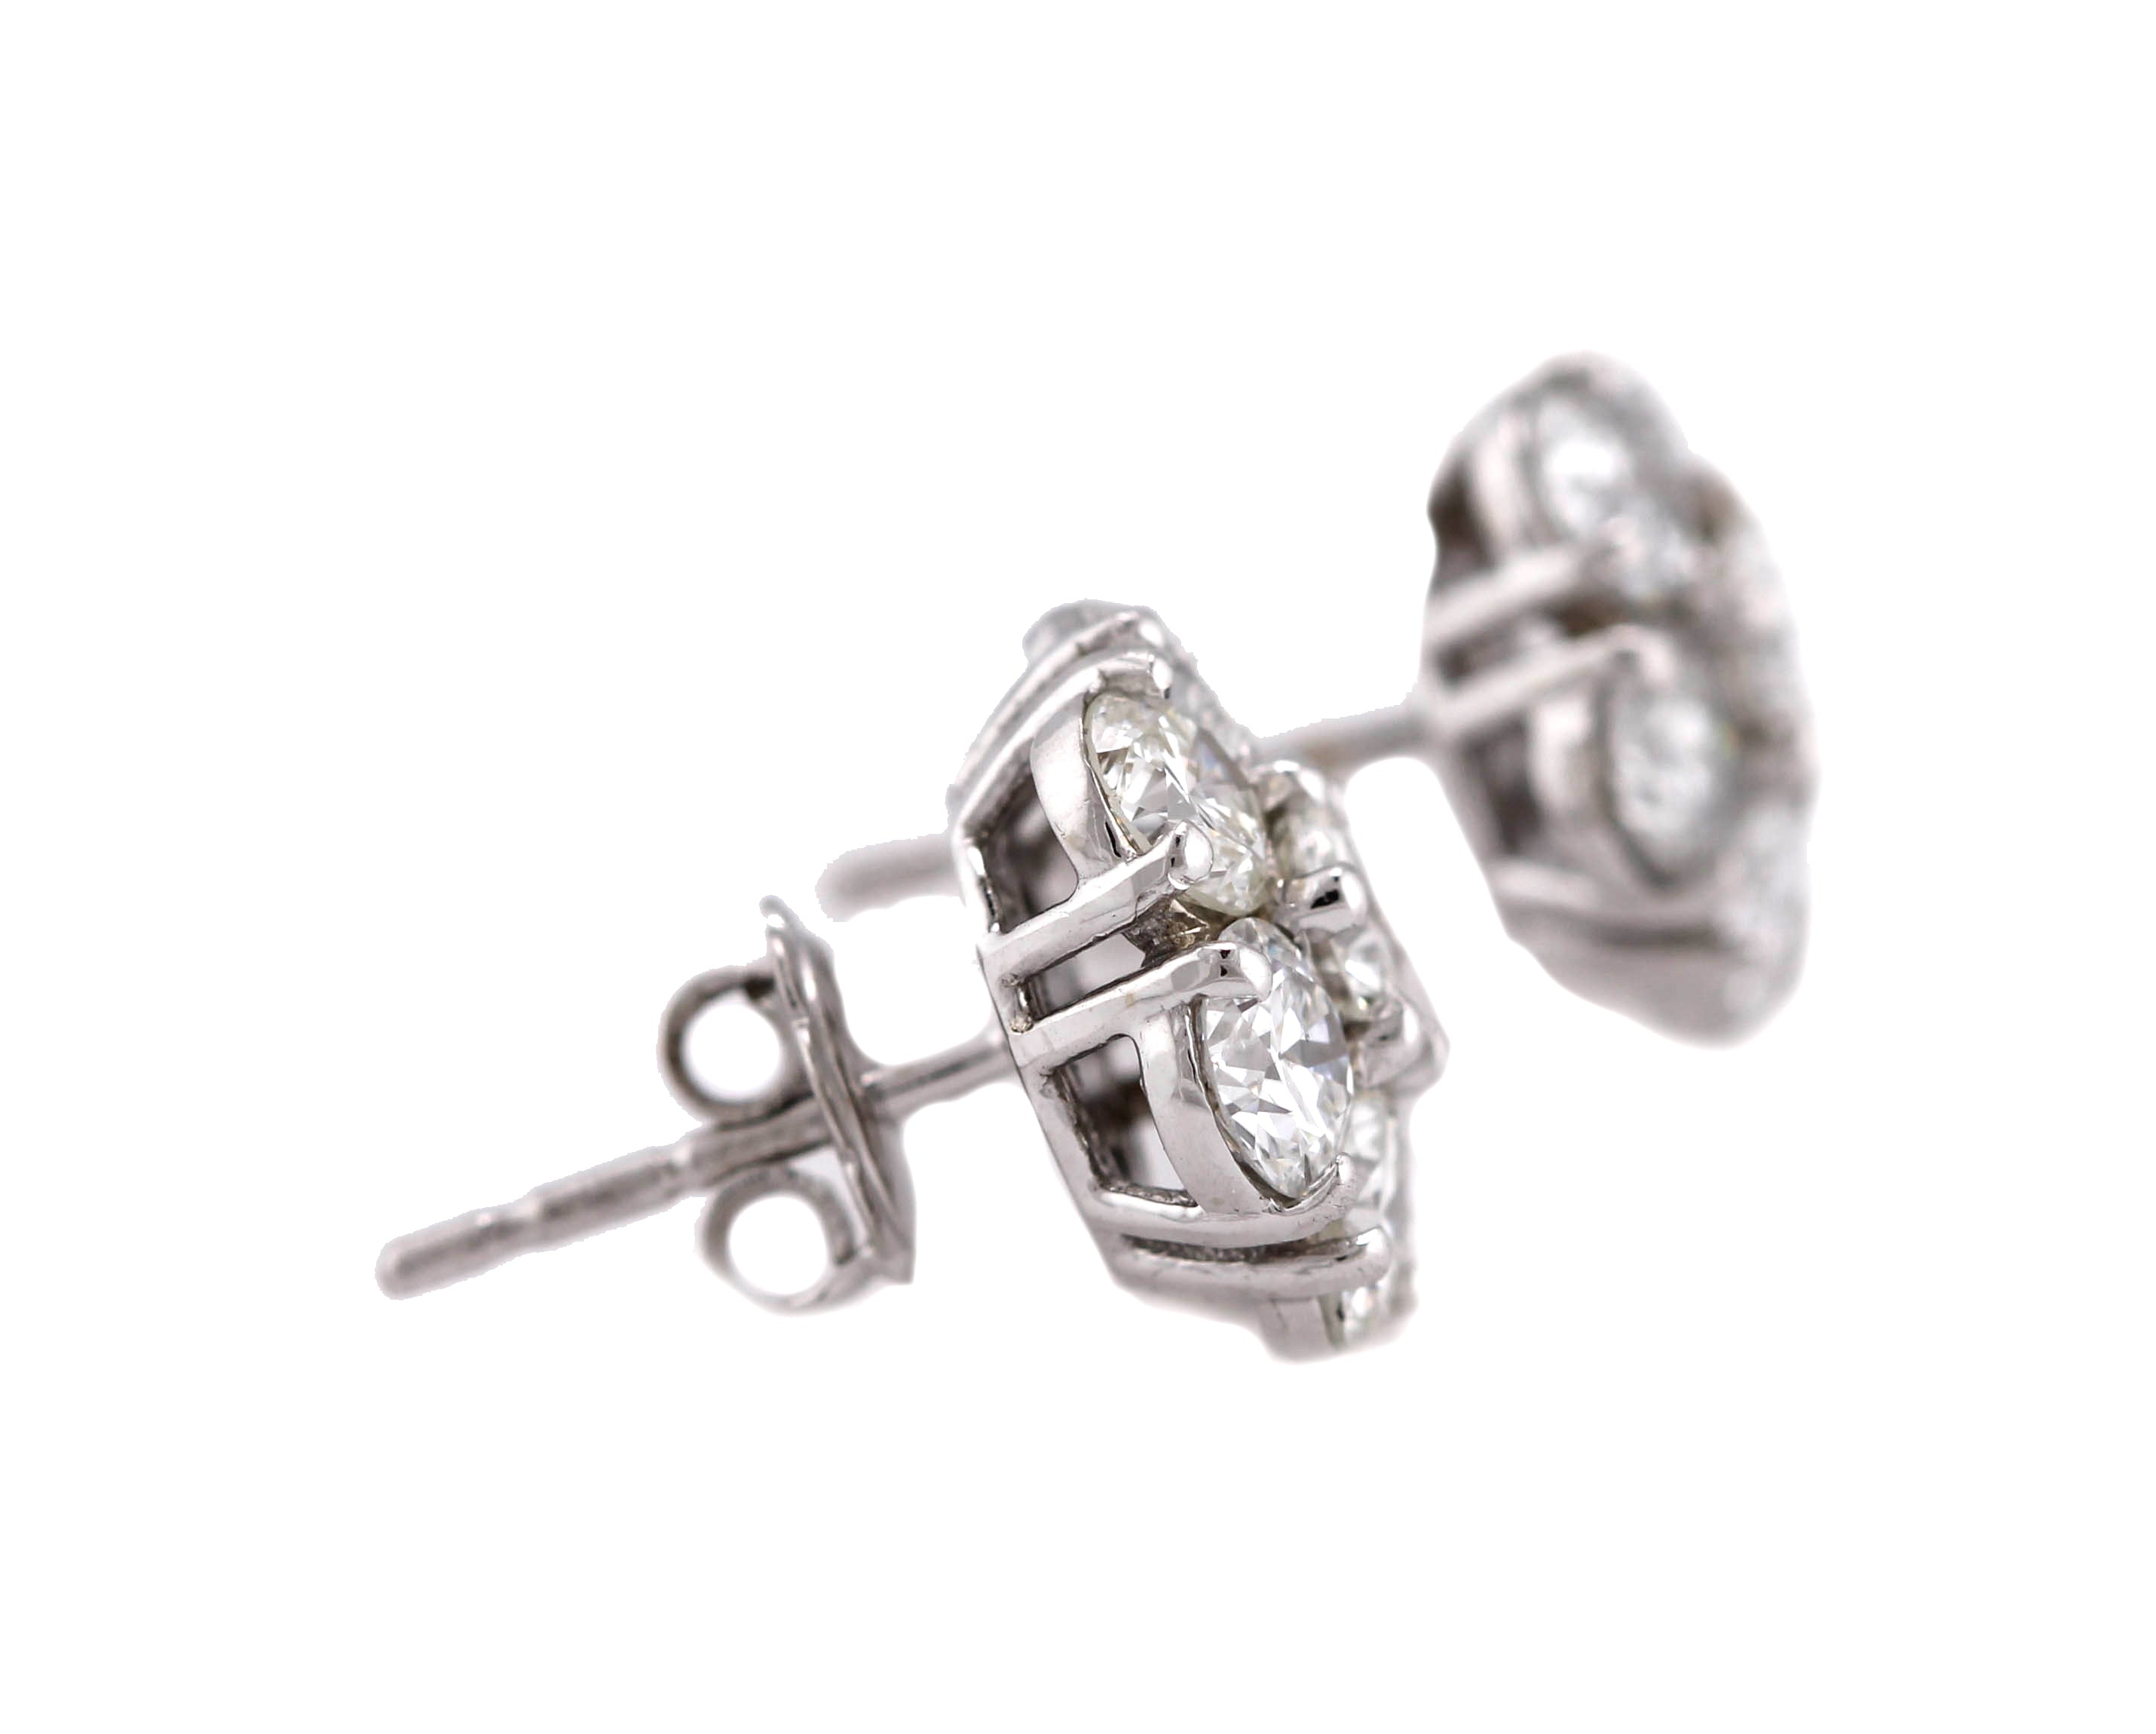 Stunning Ladies Estate 14K White Gold 4.45ctw Diamond Cluster Stud Earrings